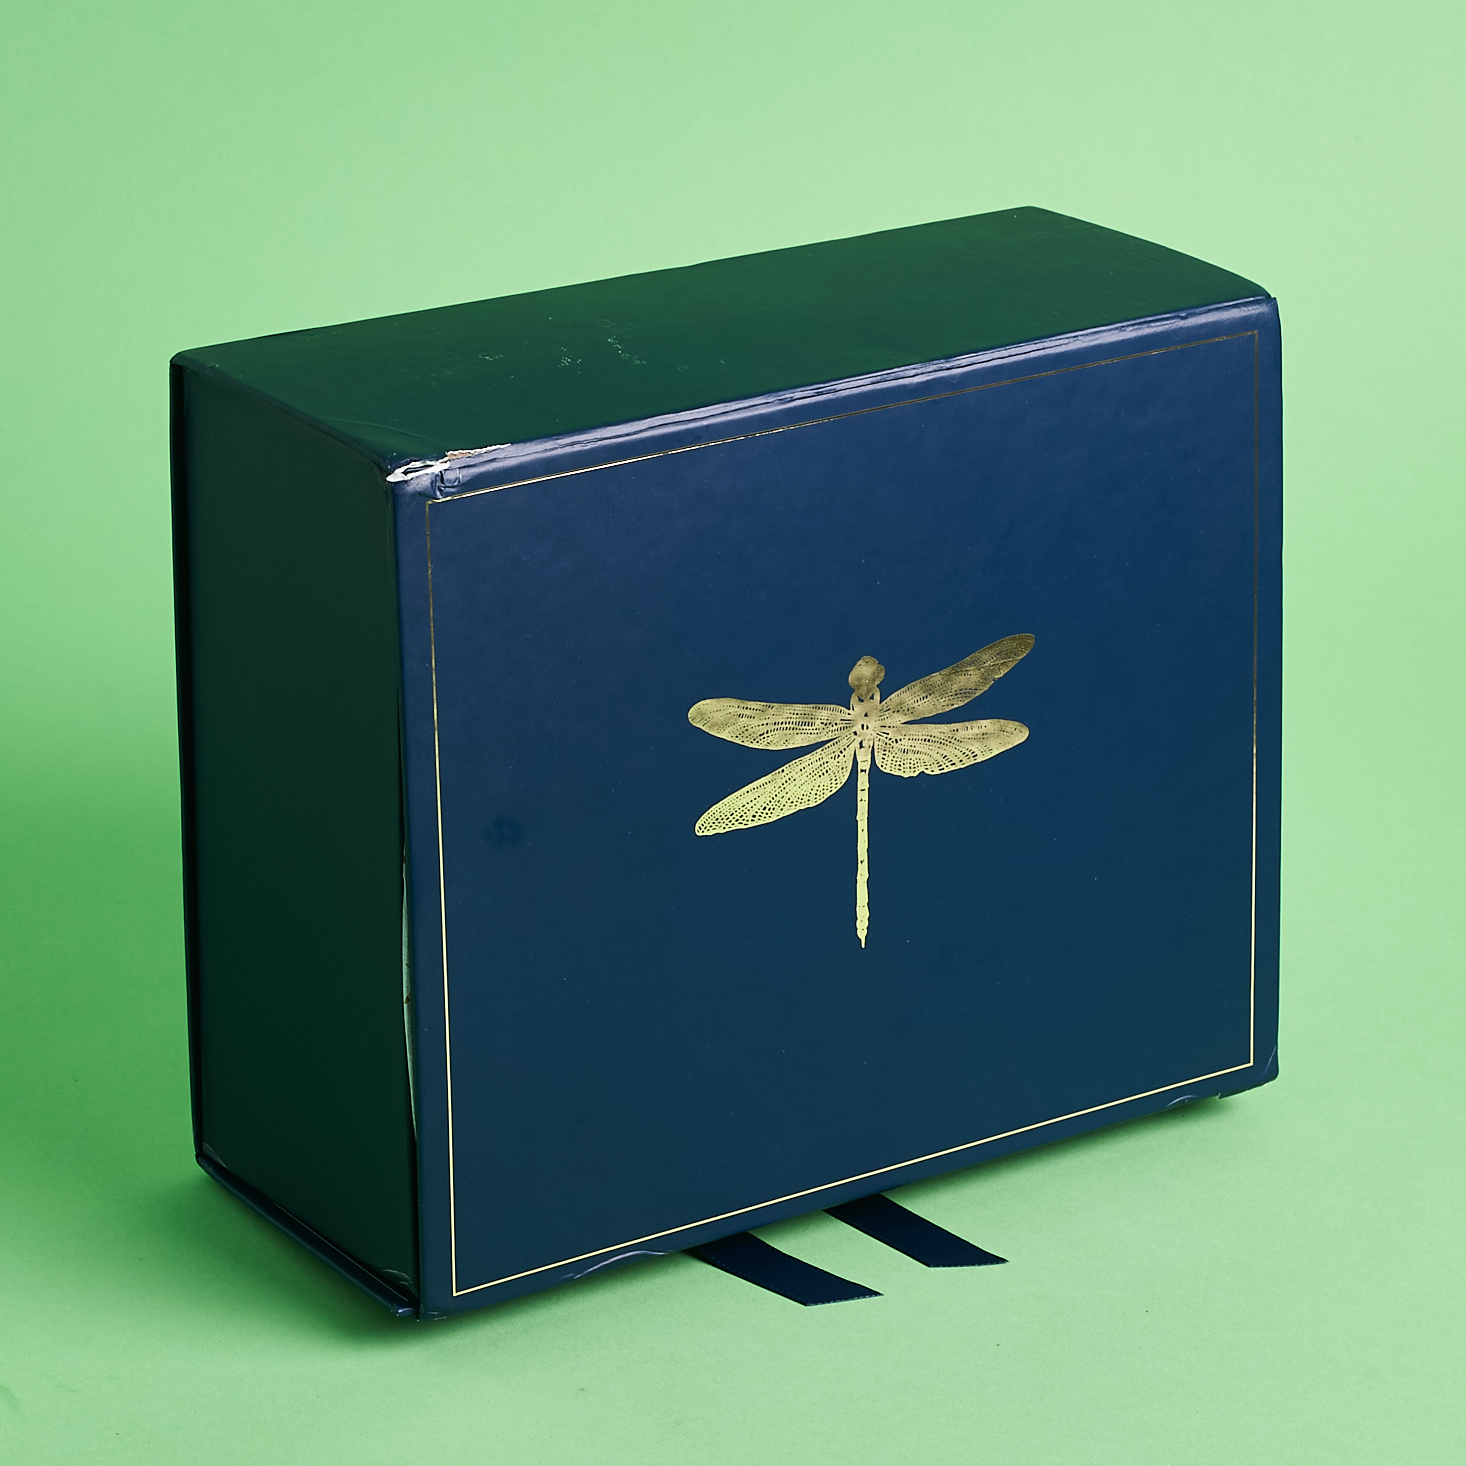 Journee Box Kyoto box